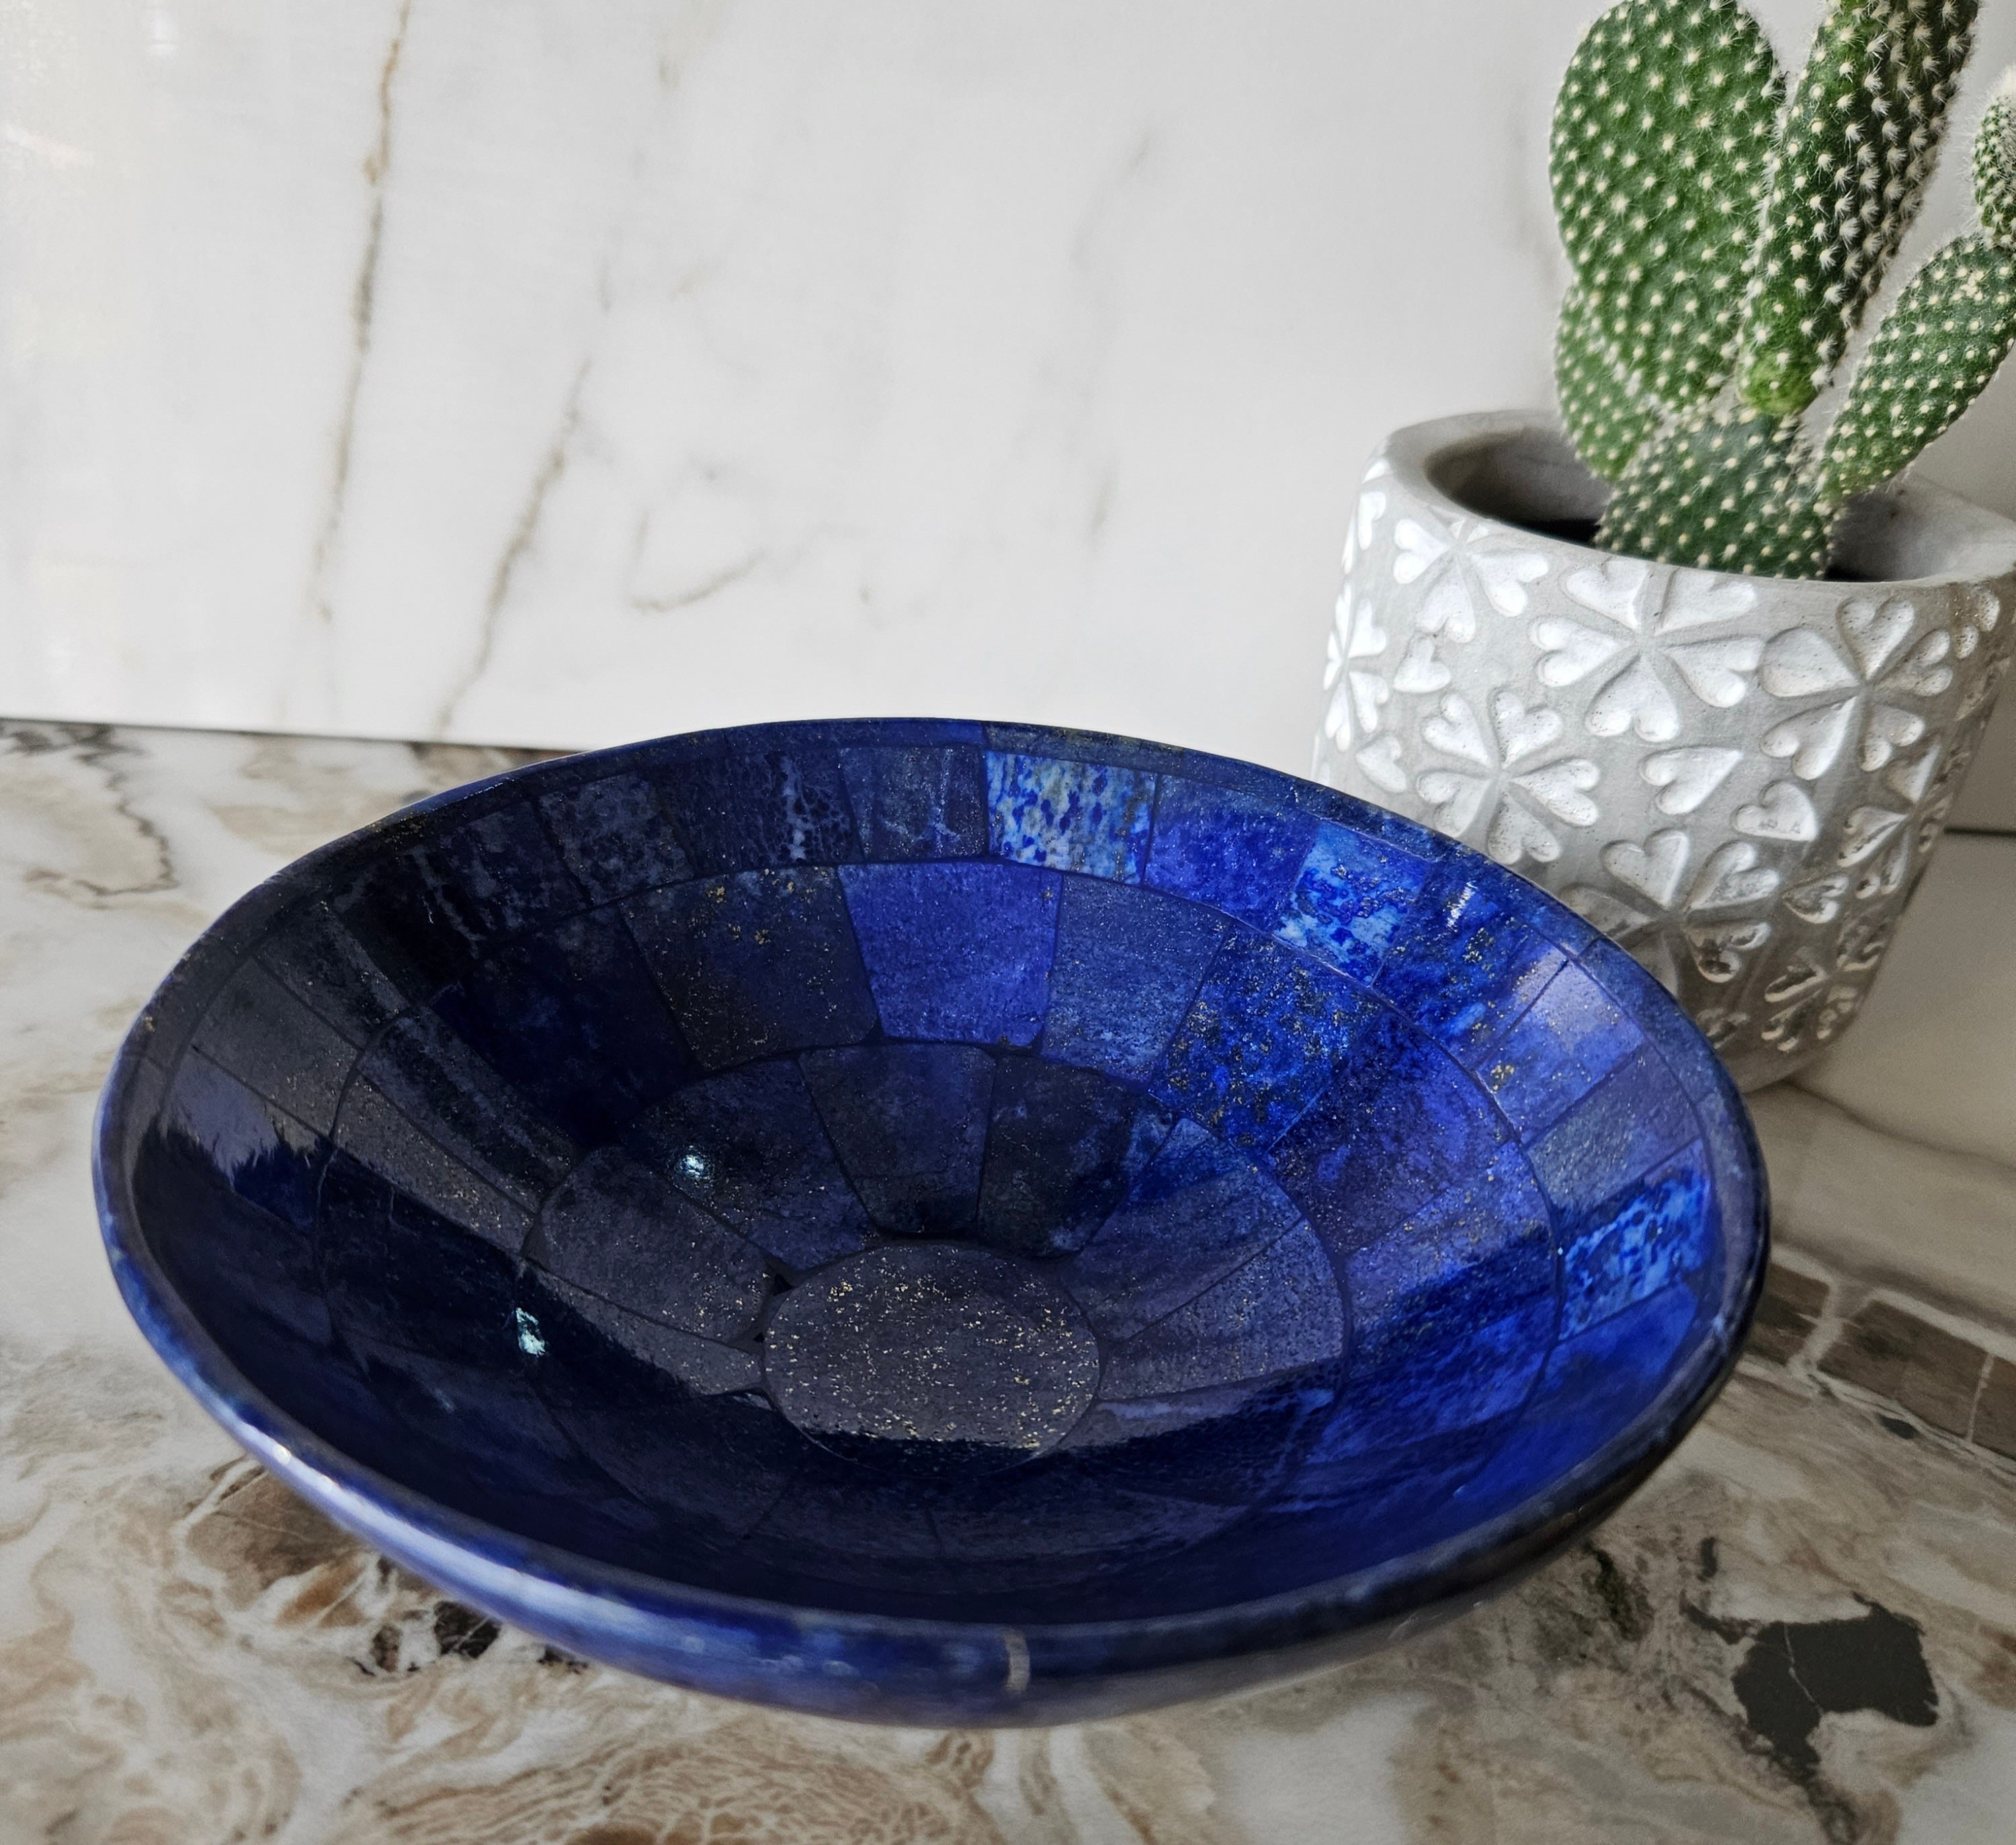 13 CM Hand Crafted Lapis Lazuli Bowl Ovel Shape Stunning Royal Blue Color Handmade bowl from Badakhshsan Afghanistan, Lapis Lazuli Decor